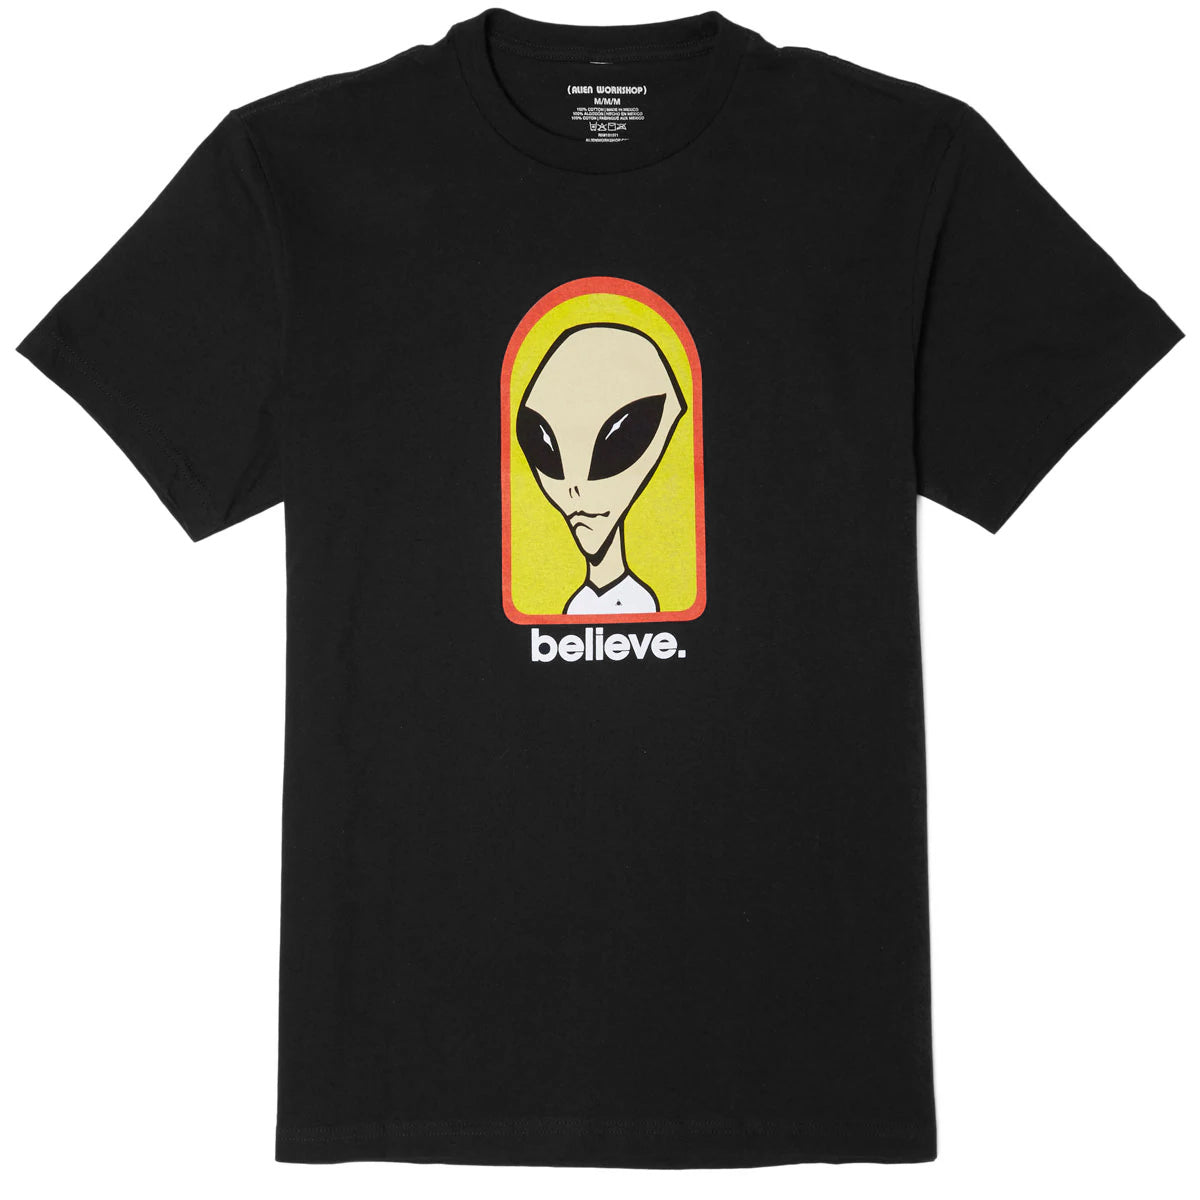 Alien Workshop Believe T-Shirt - Black image 1